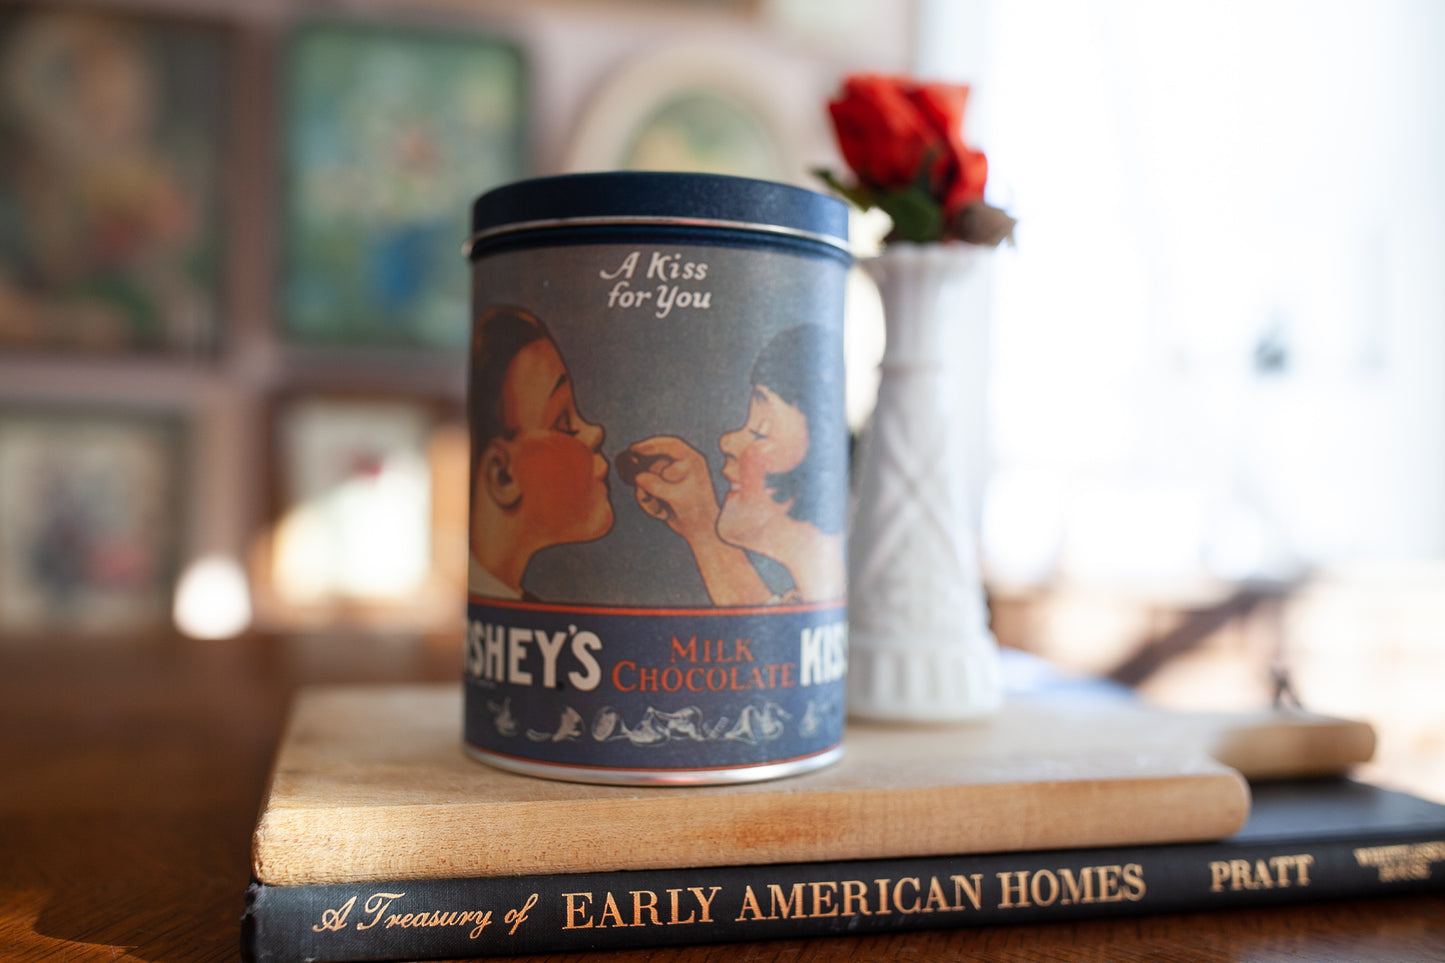 Vintage Tin- Hershey's Milk Chocolate Tin - Chocolate Tin - A Kiss for you